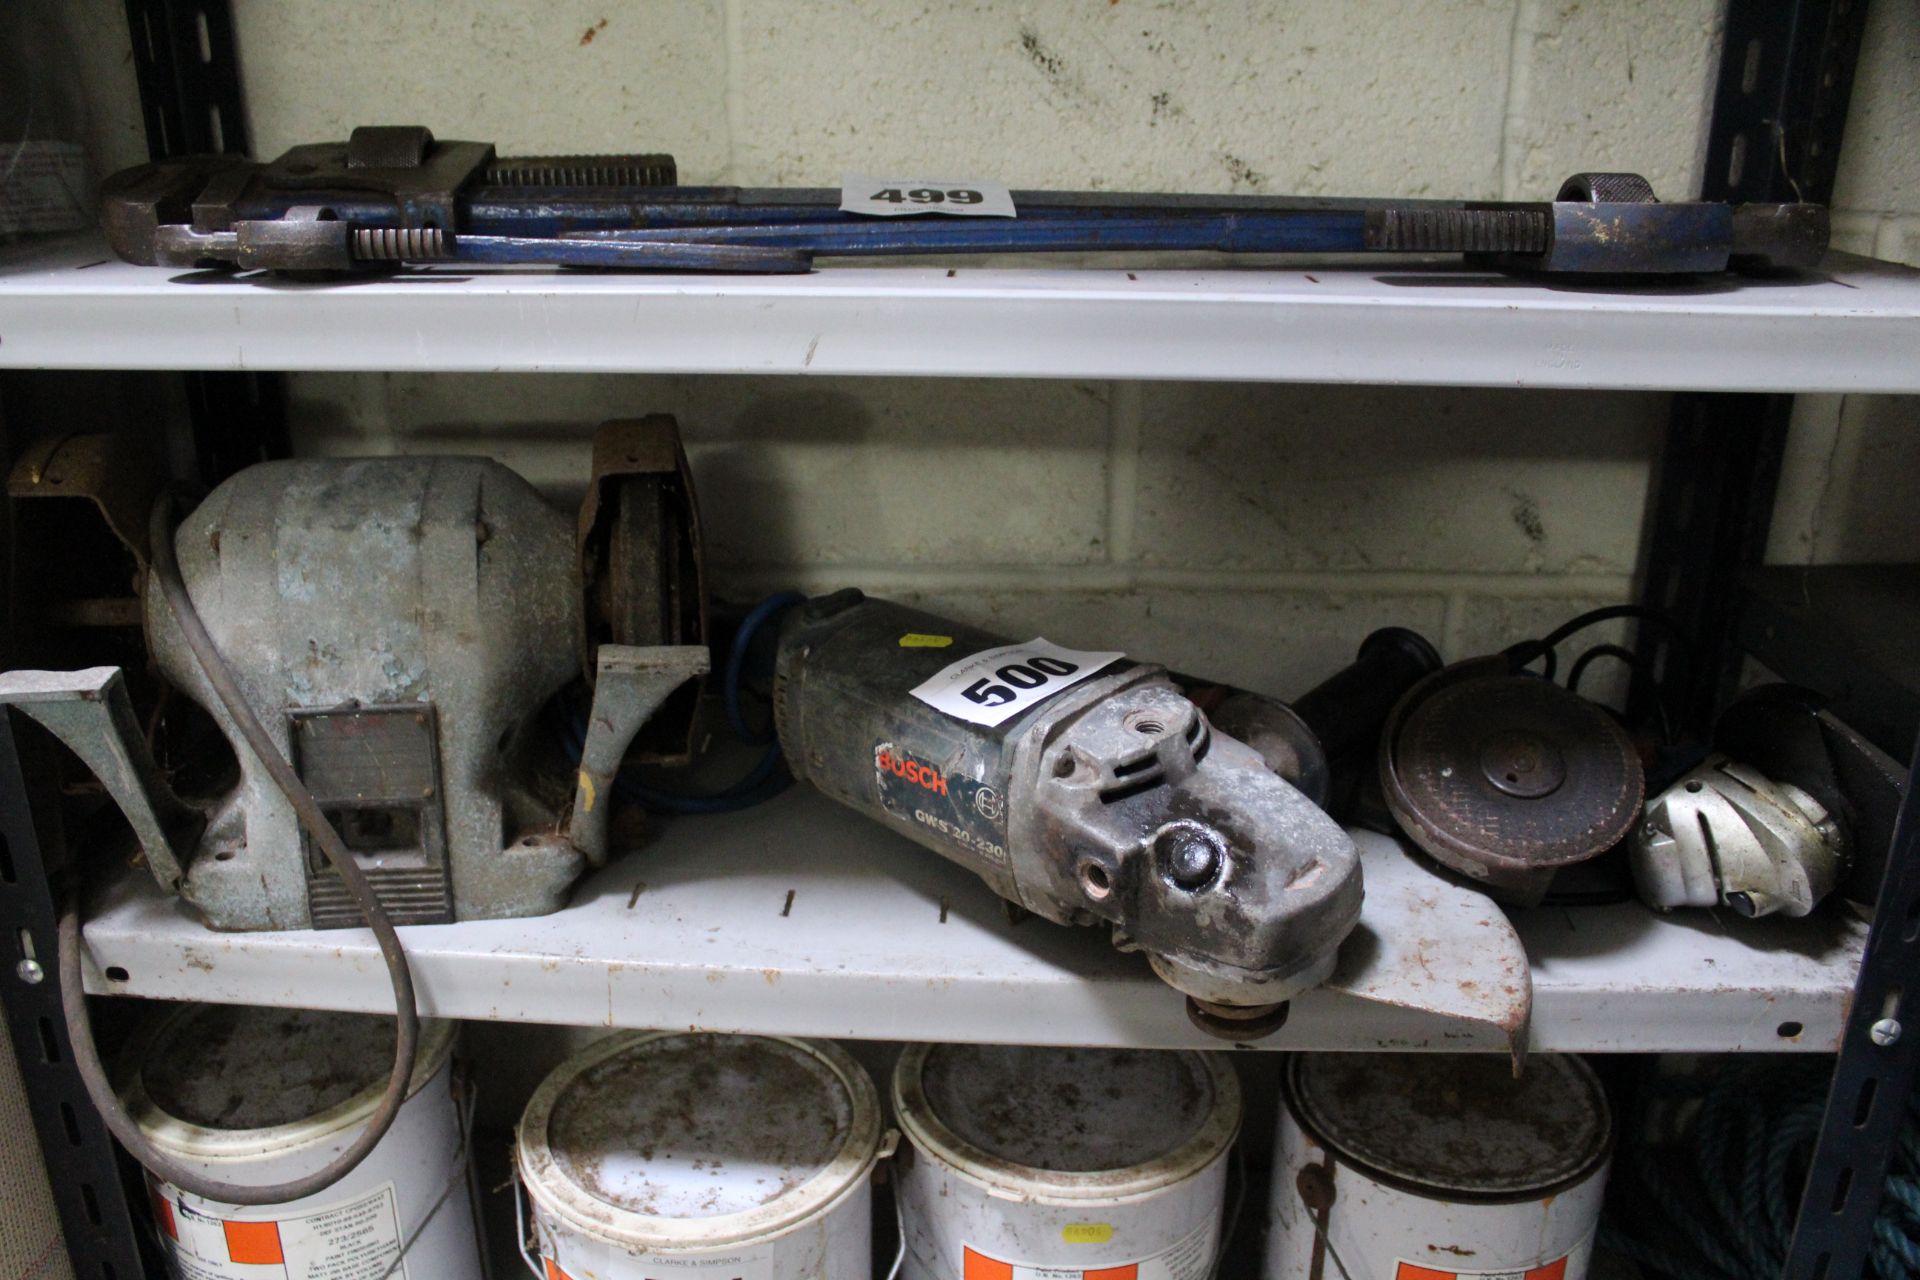 Various angle grinders and vintage bench grinder.